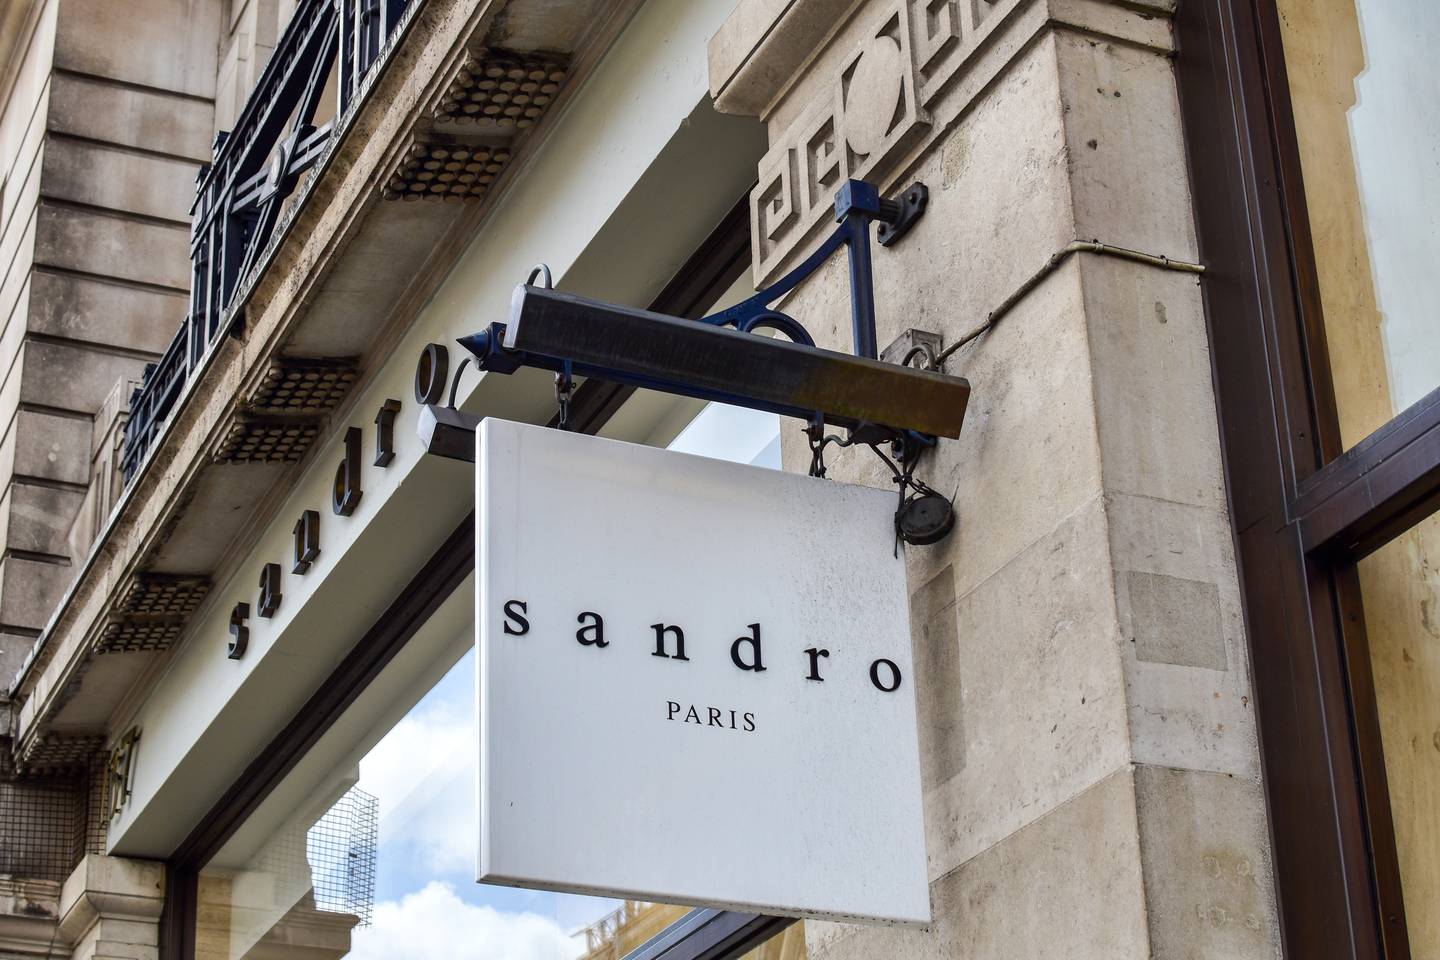 Facade of the Sandro store on Regent Street.